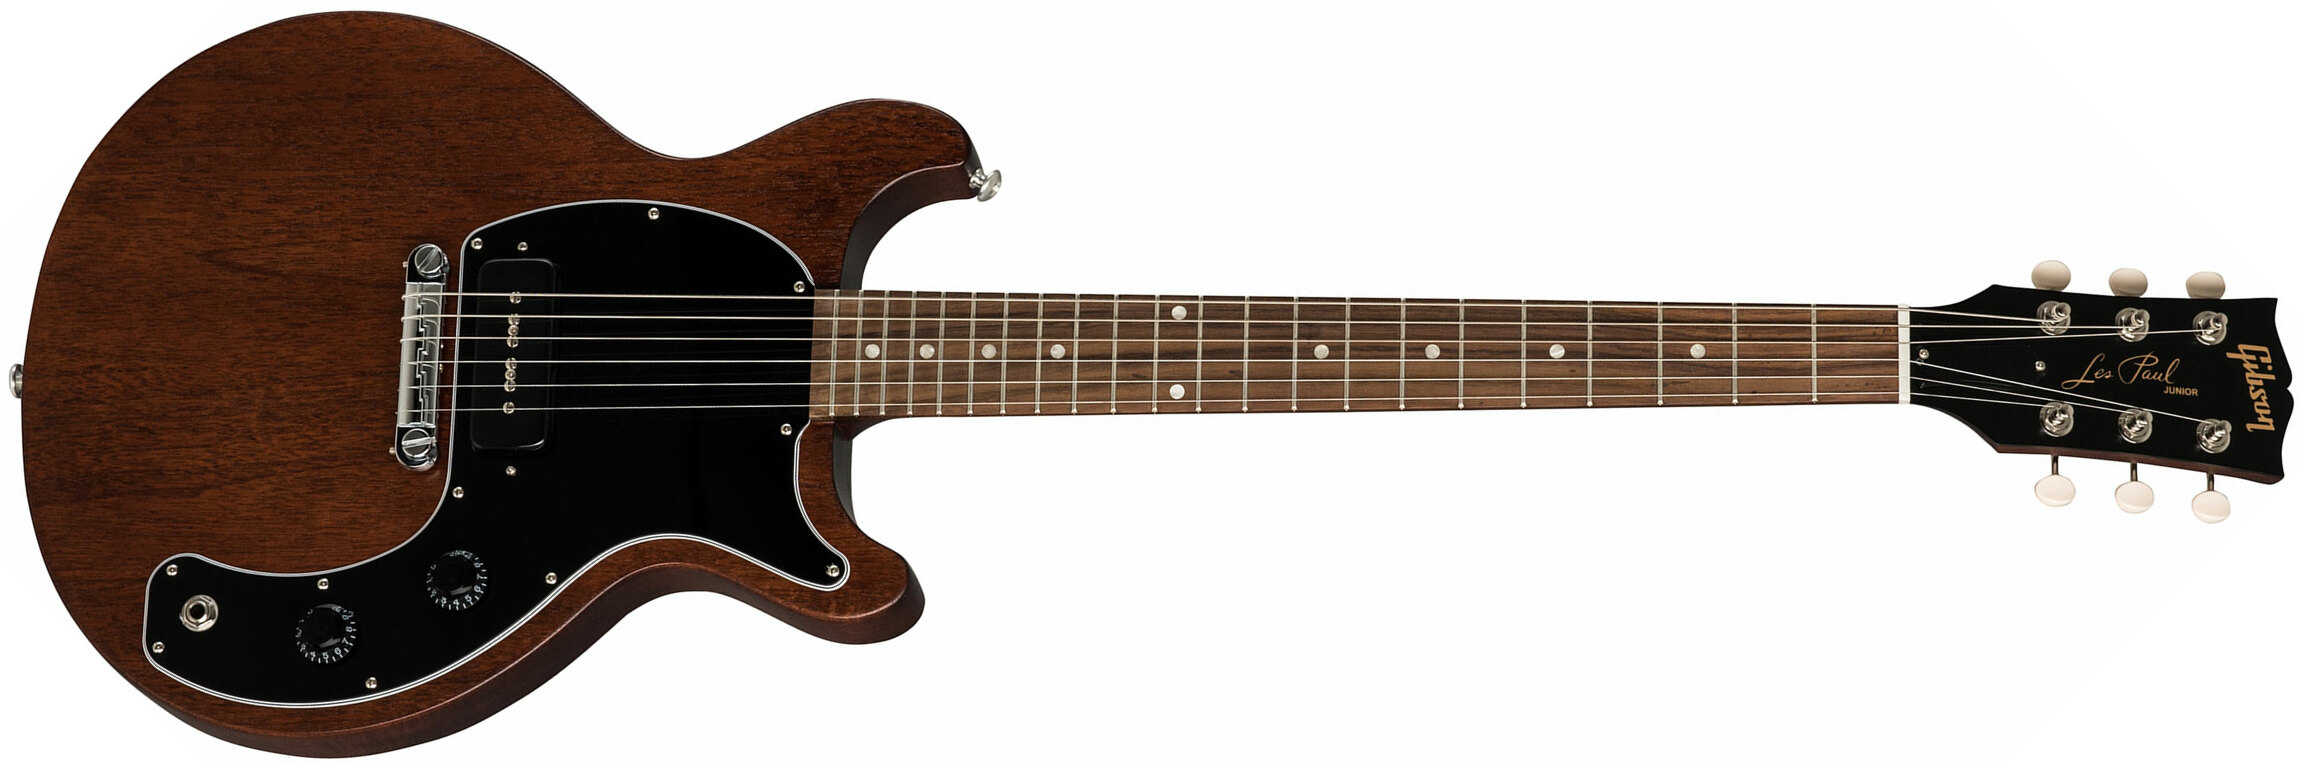 Gibson Les Paul Junior Tribute 2019 P90 Ht Rw - Worn Brown - Single cut electric guitar - Main picture